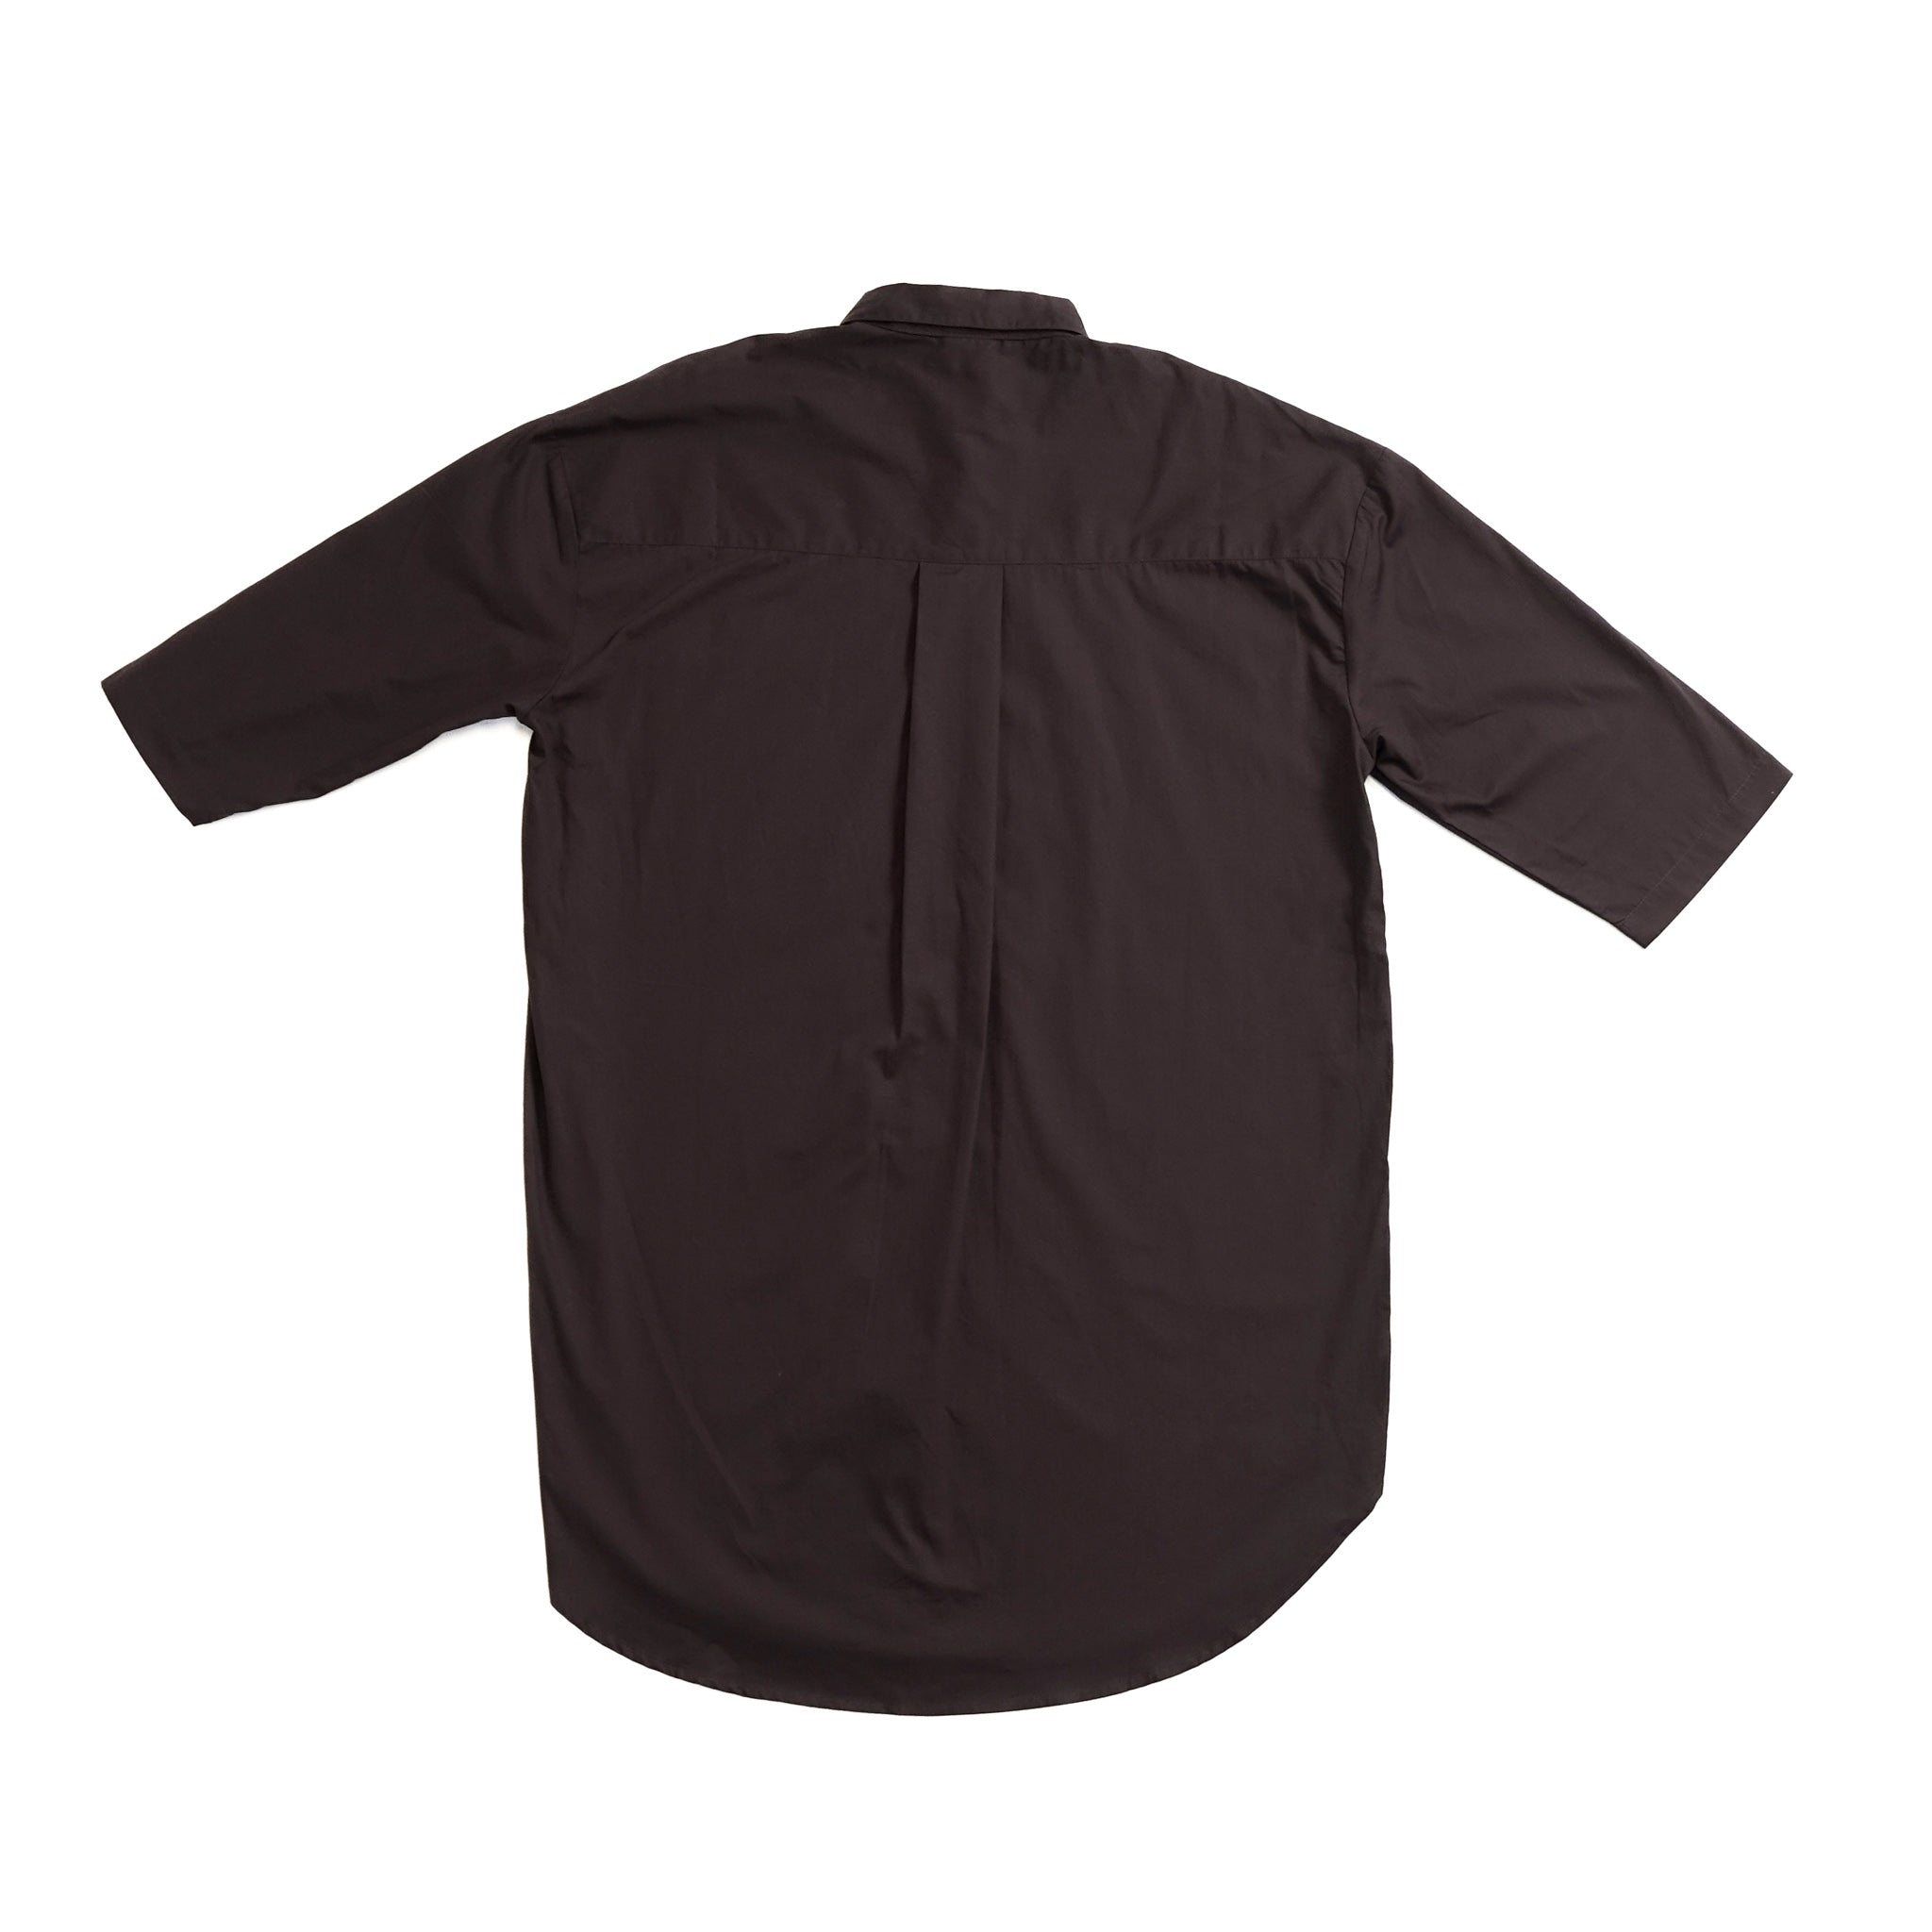 CCC 1.0 | Women Shirt Dress - Truffle Sand Olive Sage